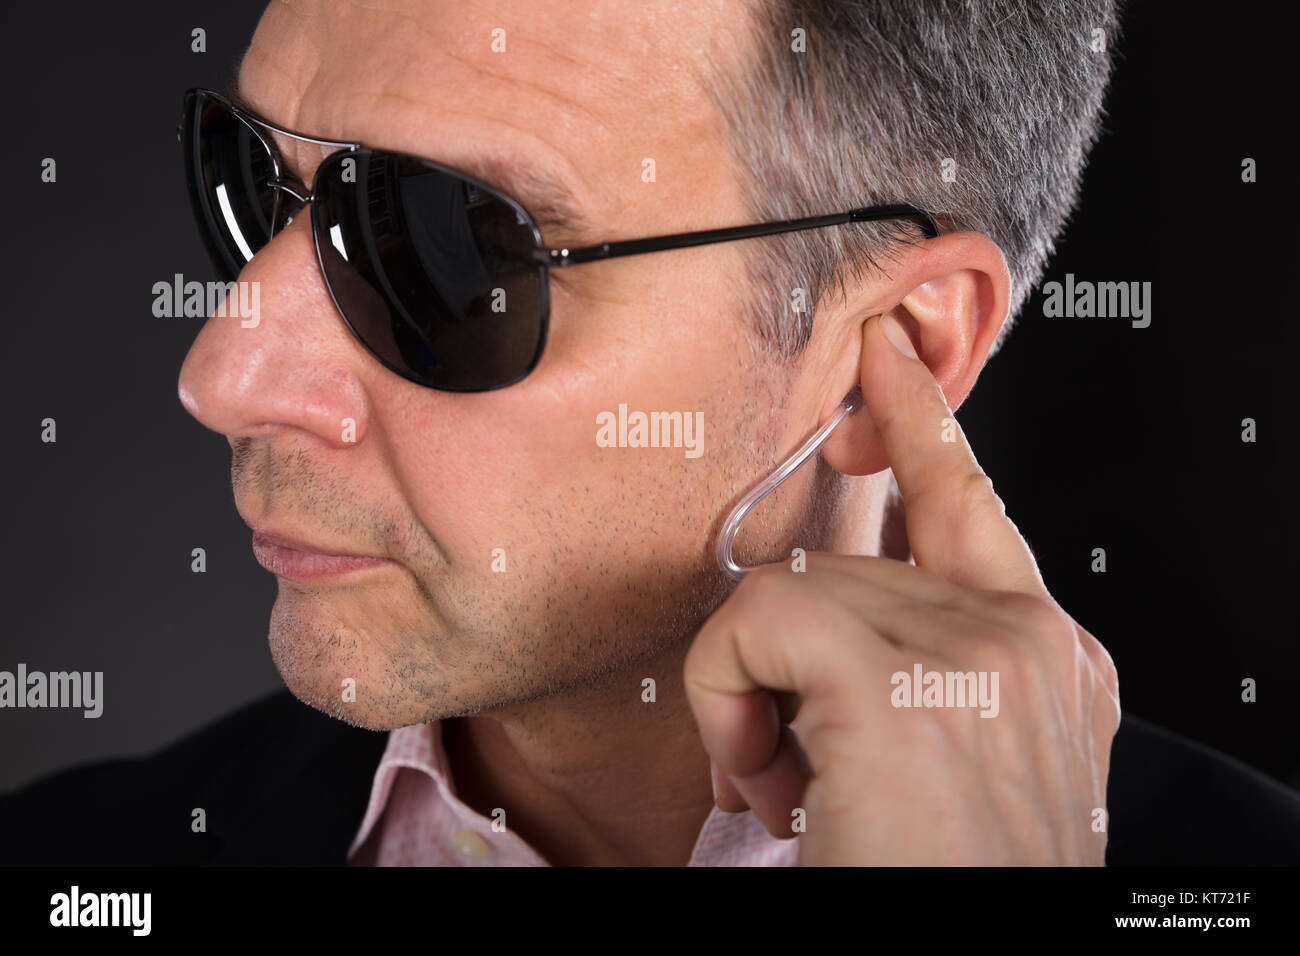 secret service agent earpiece